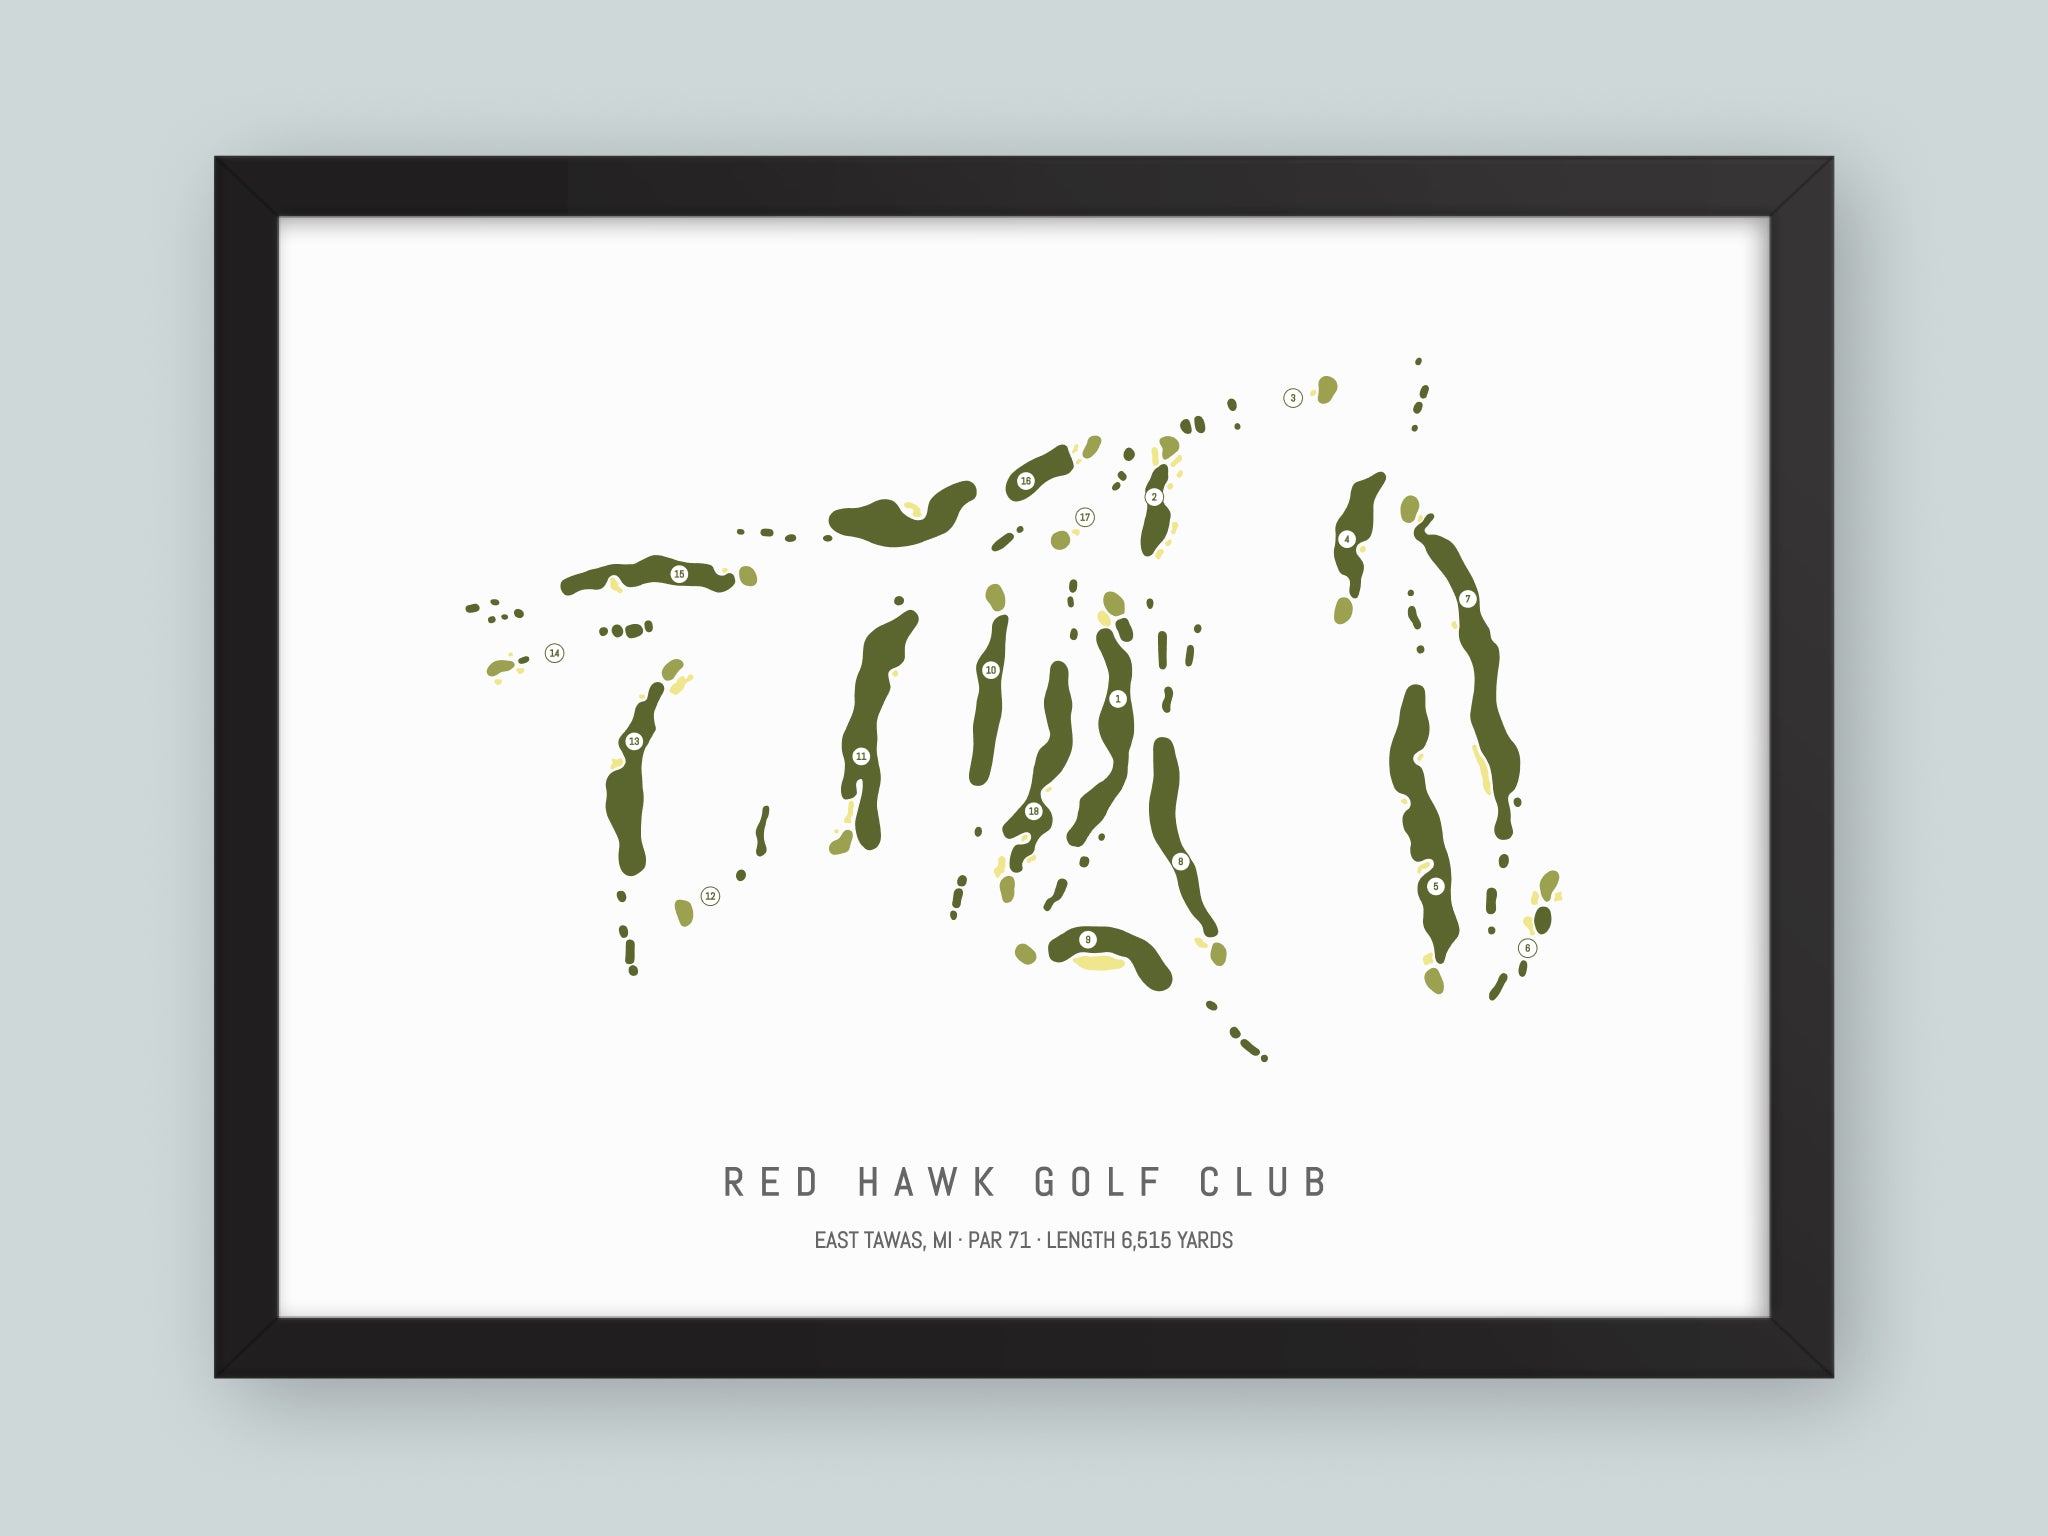 Red-Hawk-Golf-Club-MI--Black-Frame-24x18-With-Hole-Numbers